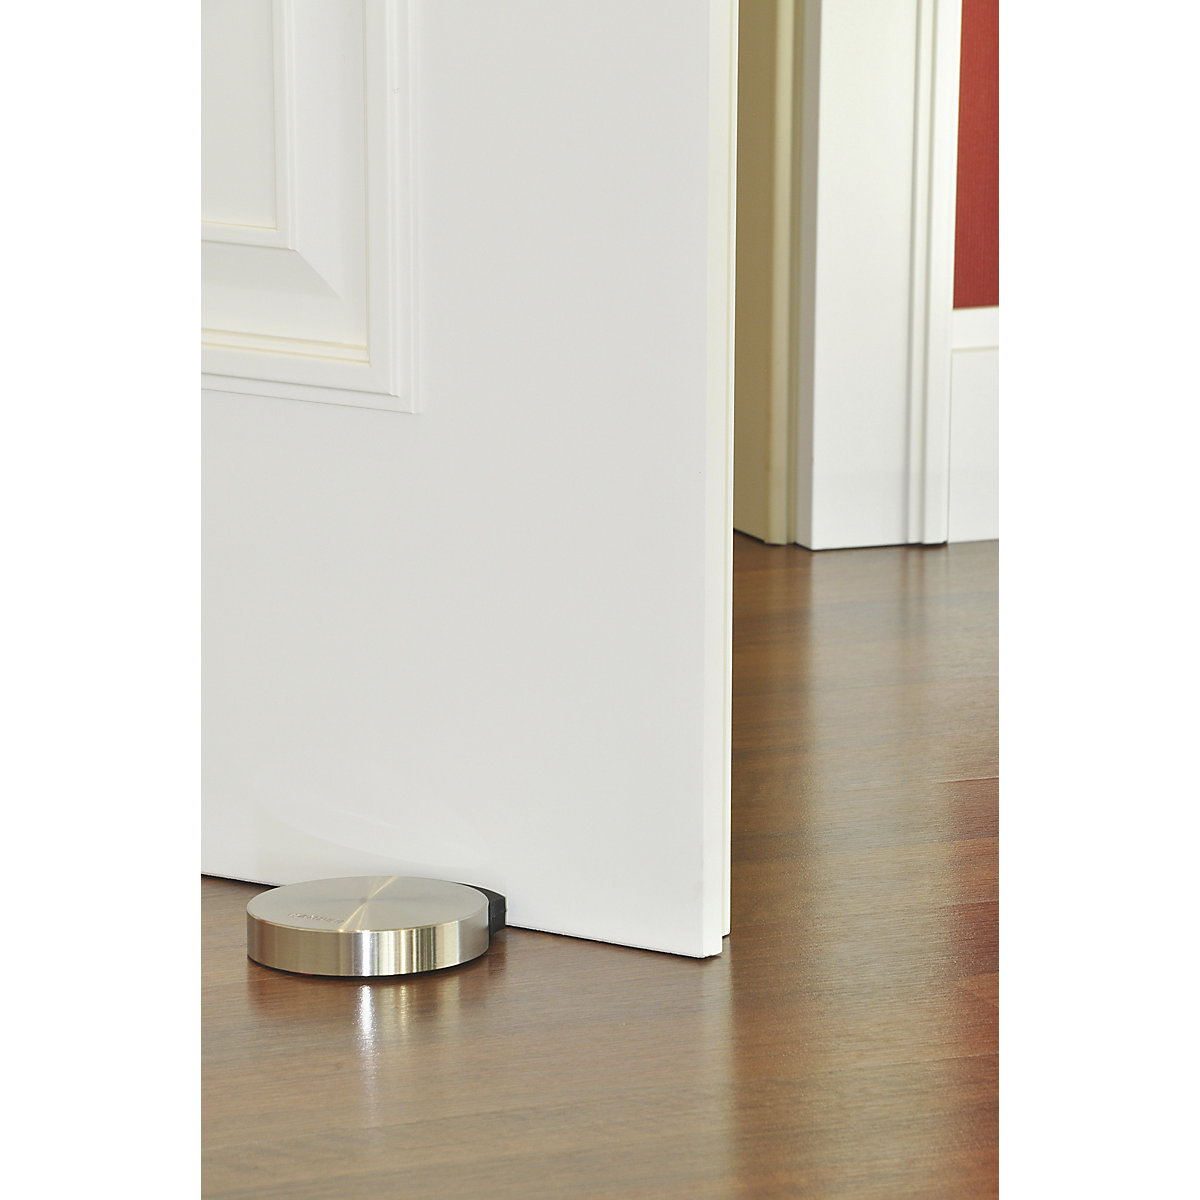 Designer floor mounted door stopper – Wagner (Product illustration 2)-1